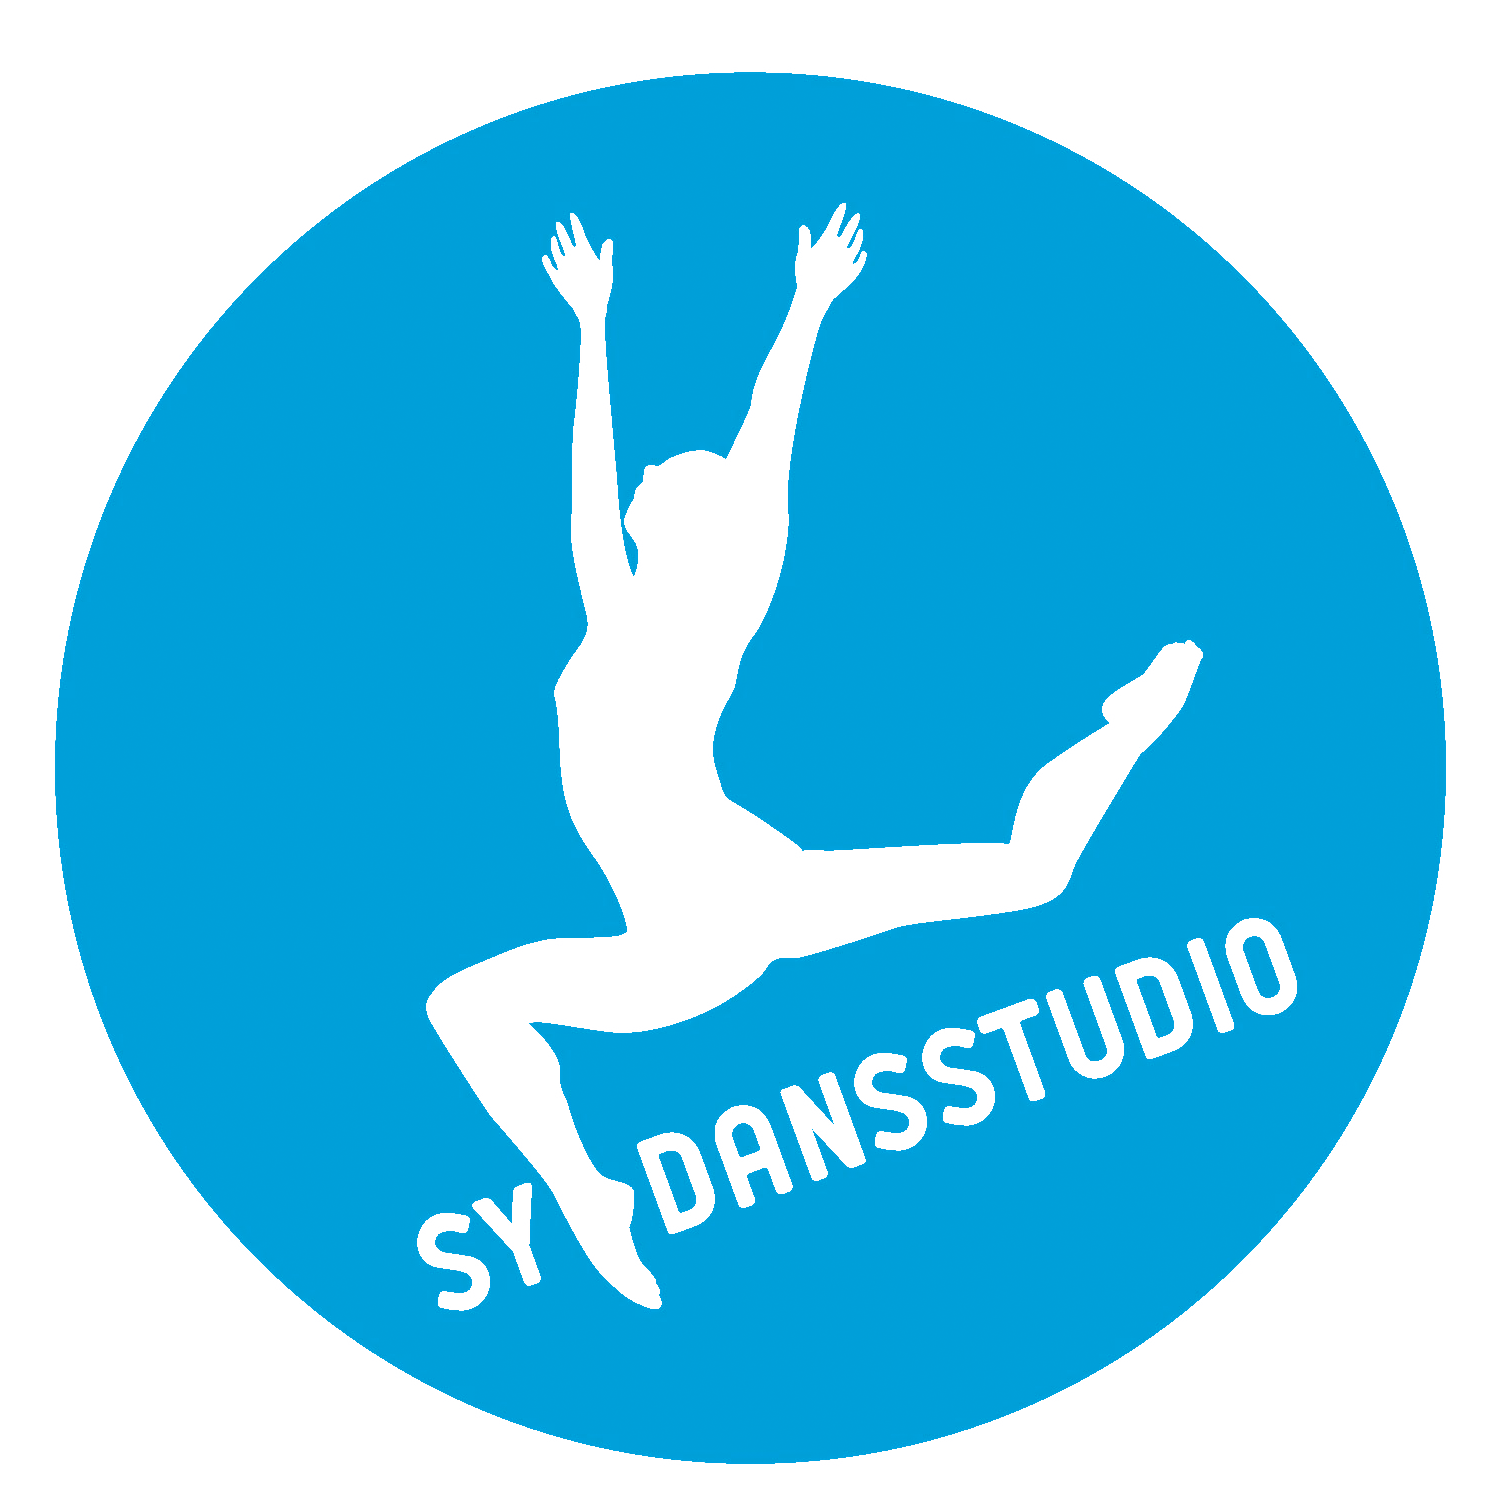 Sy-dansstudio logo